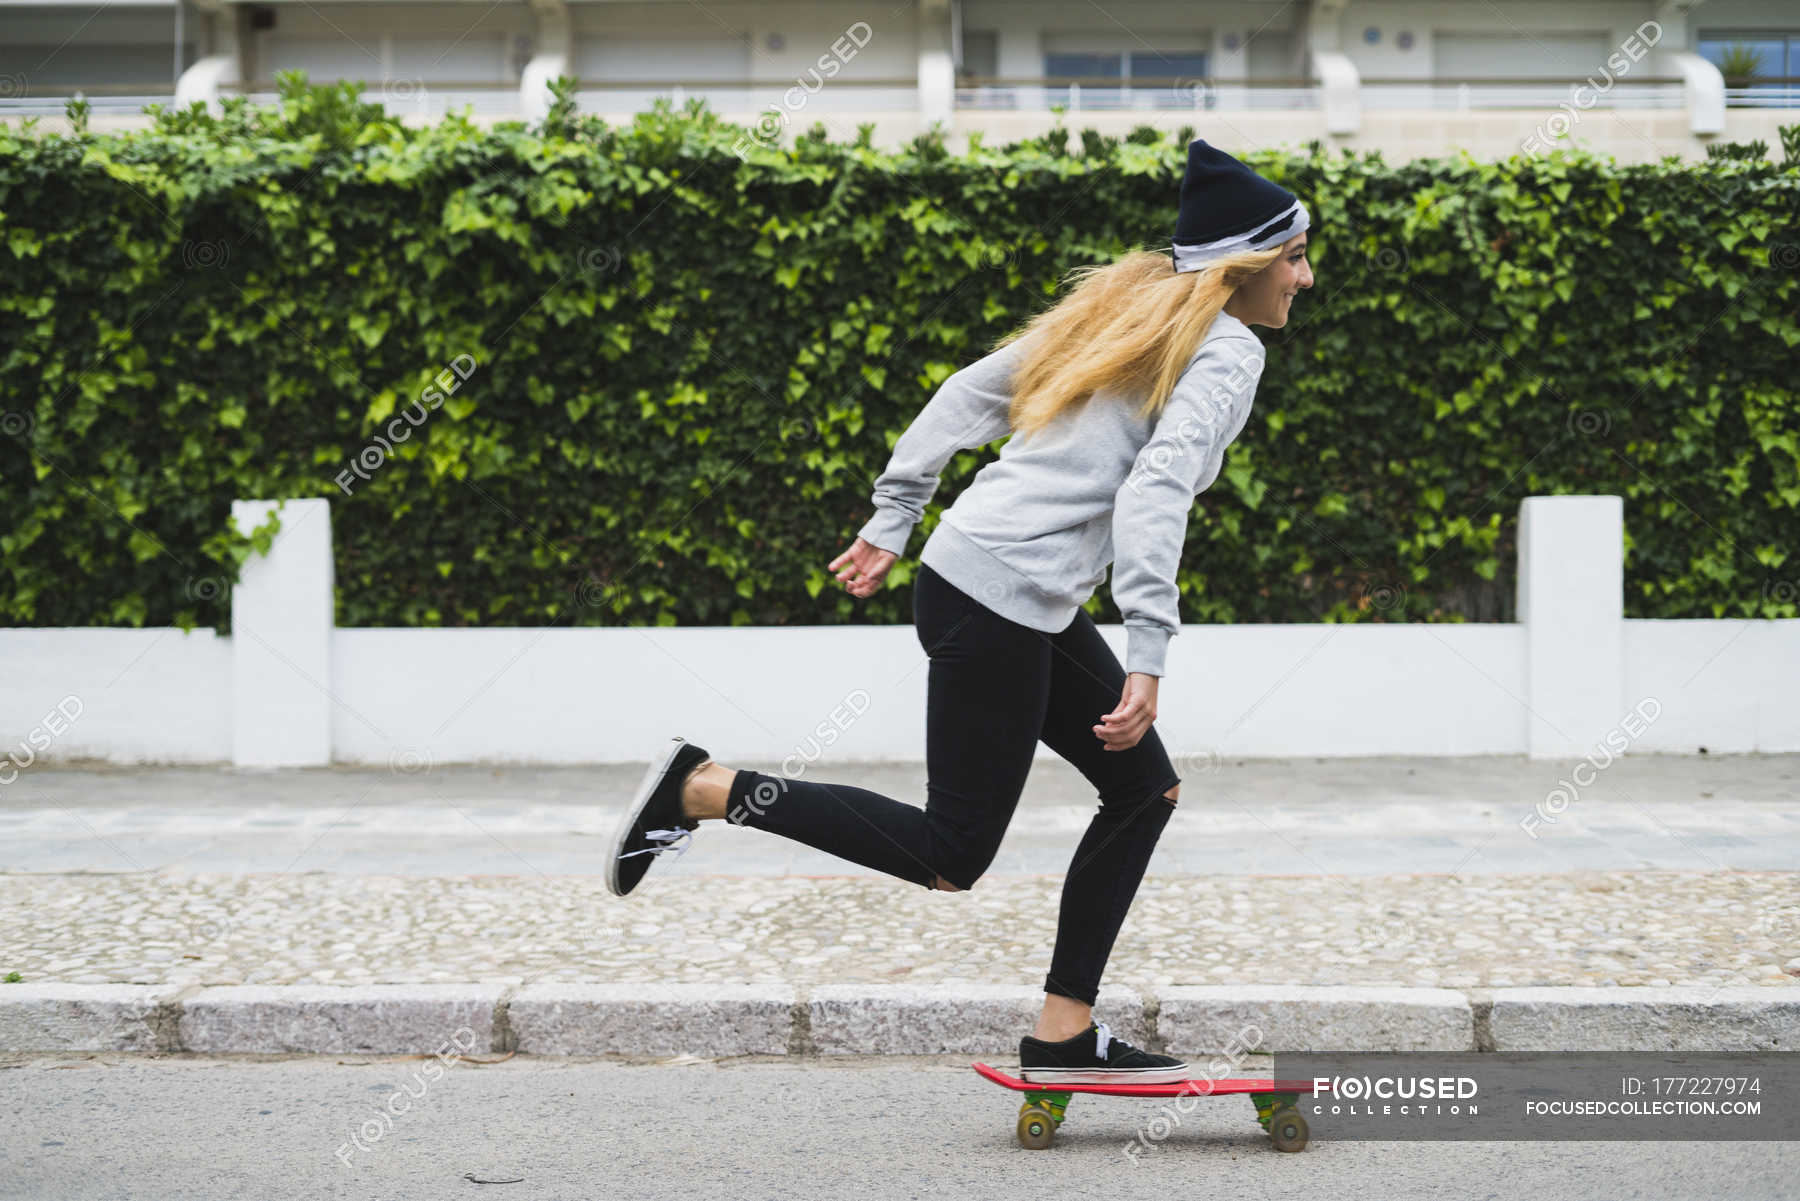 Young stylish woman skateboarding street — daytime, hobby - Stock Photo #177227974